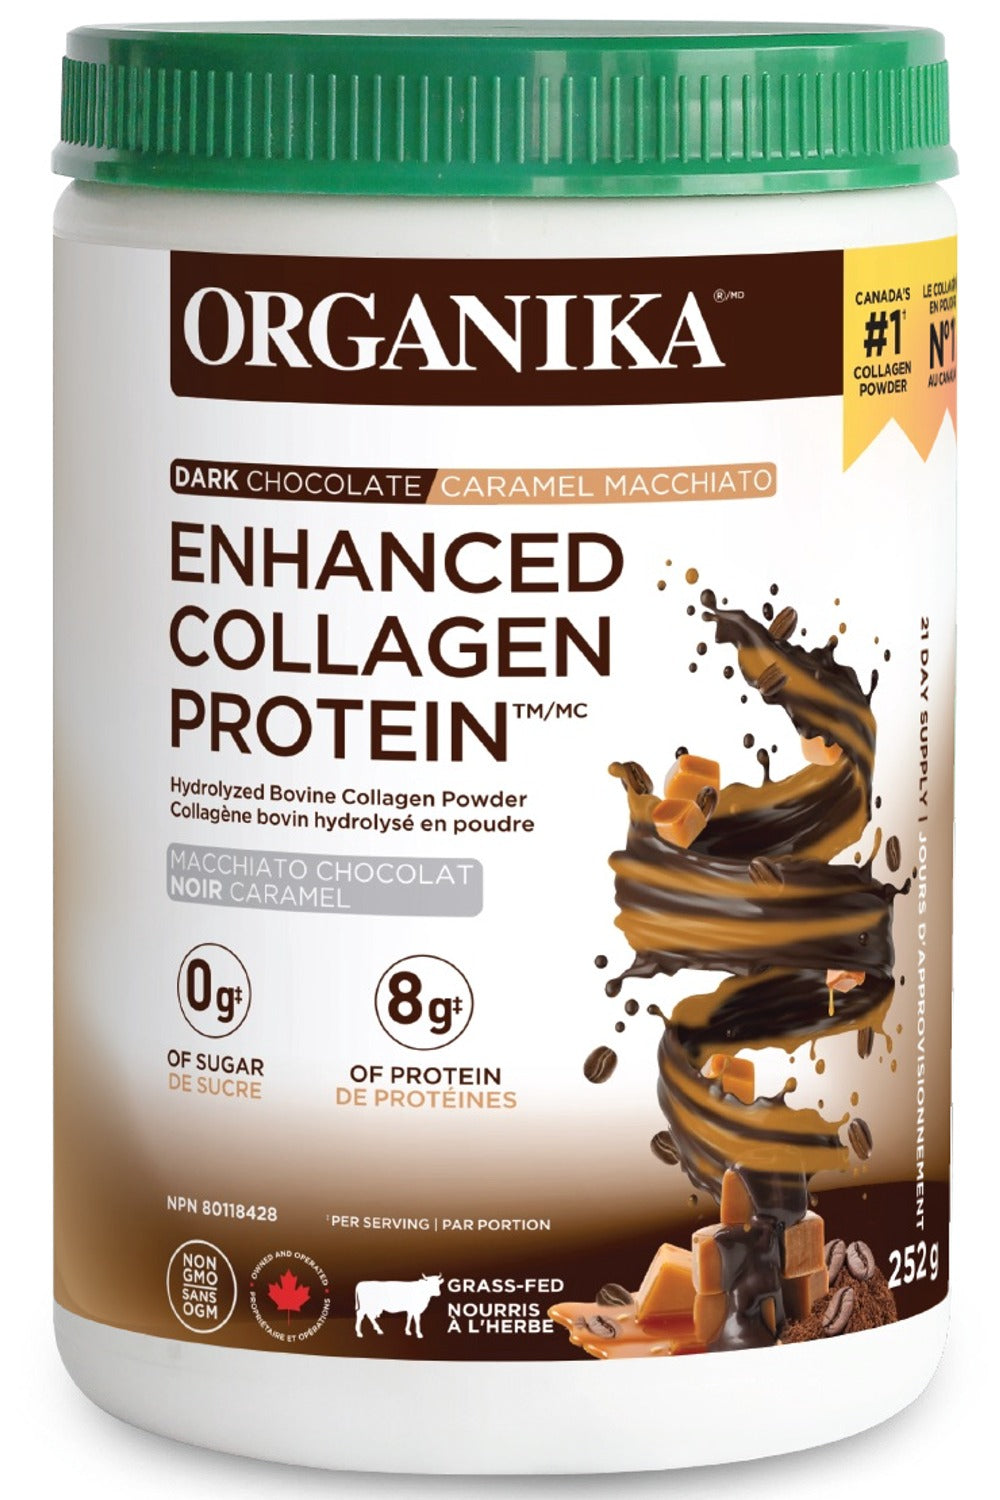 ORGANIKA Enhanced Collagen Protein (Dark Chocolate / Caramel Macchiato